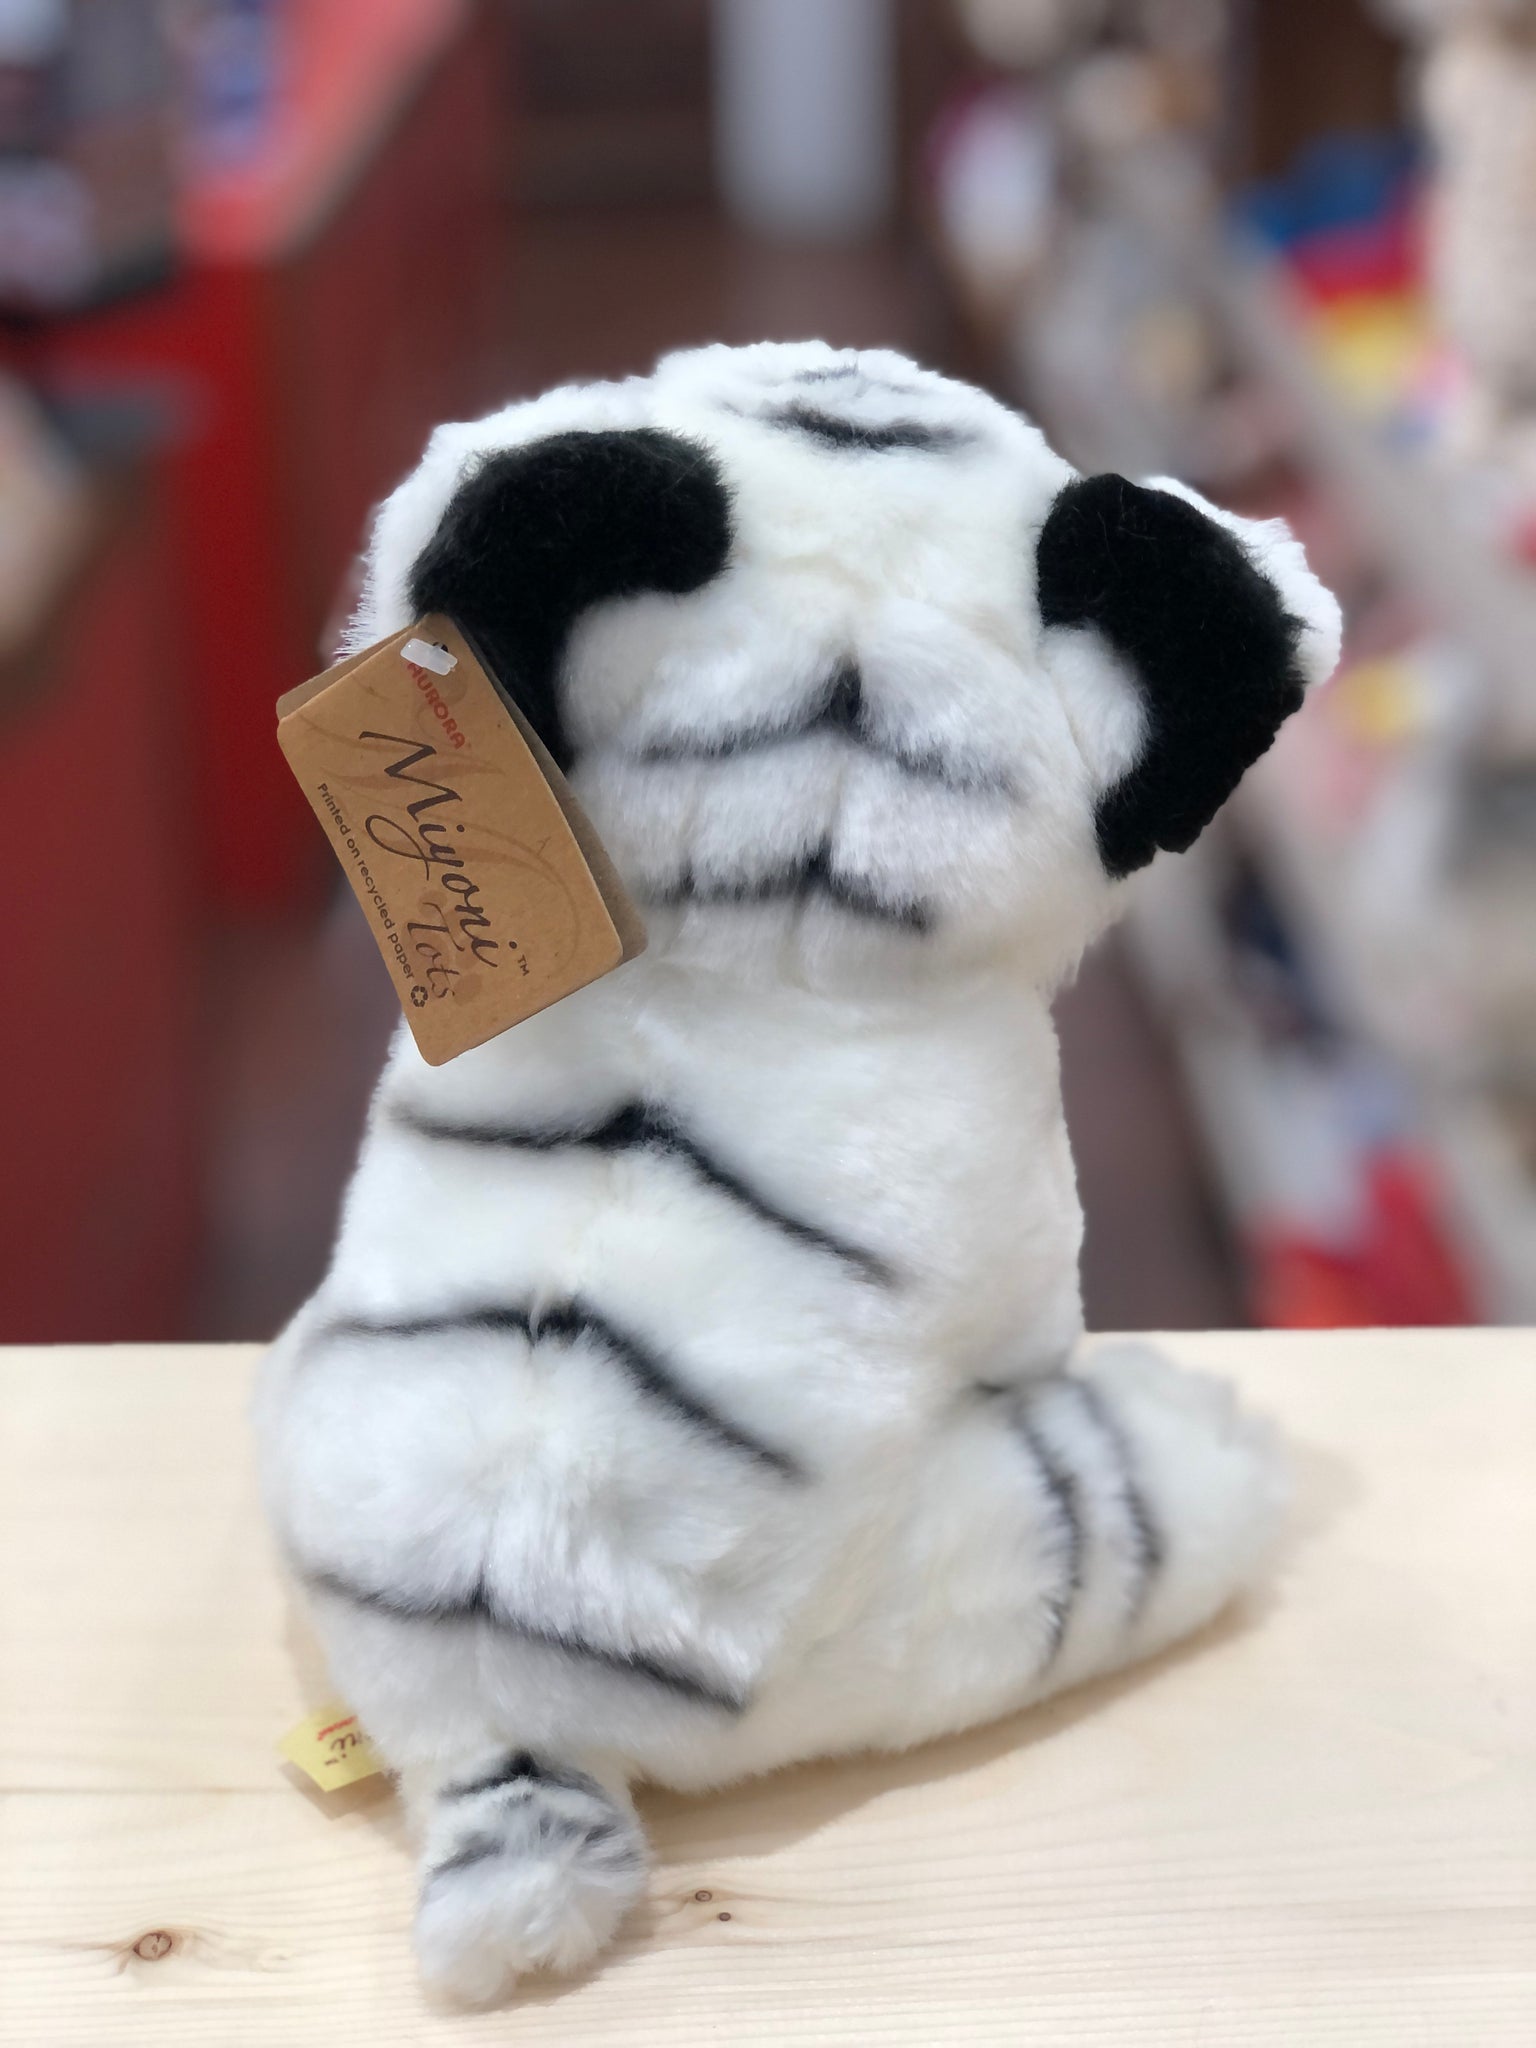 Aurora - Miyoni - 9 Panda Cub